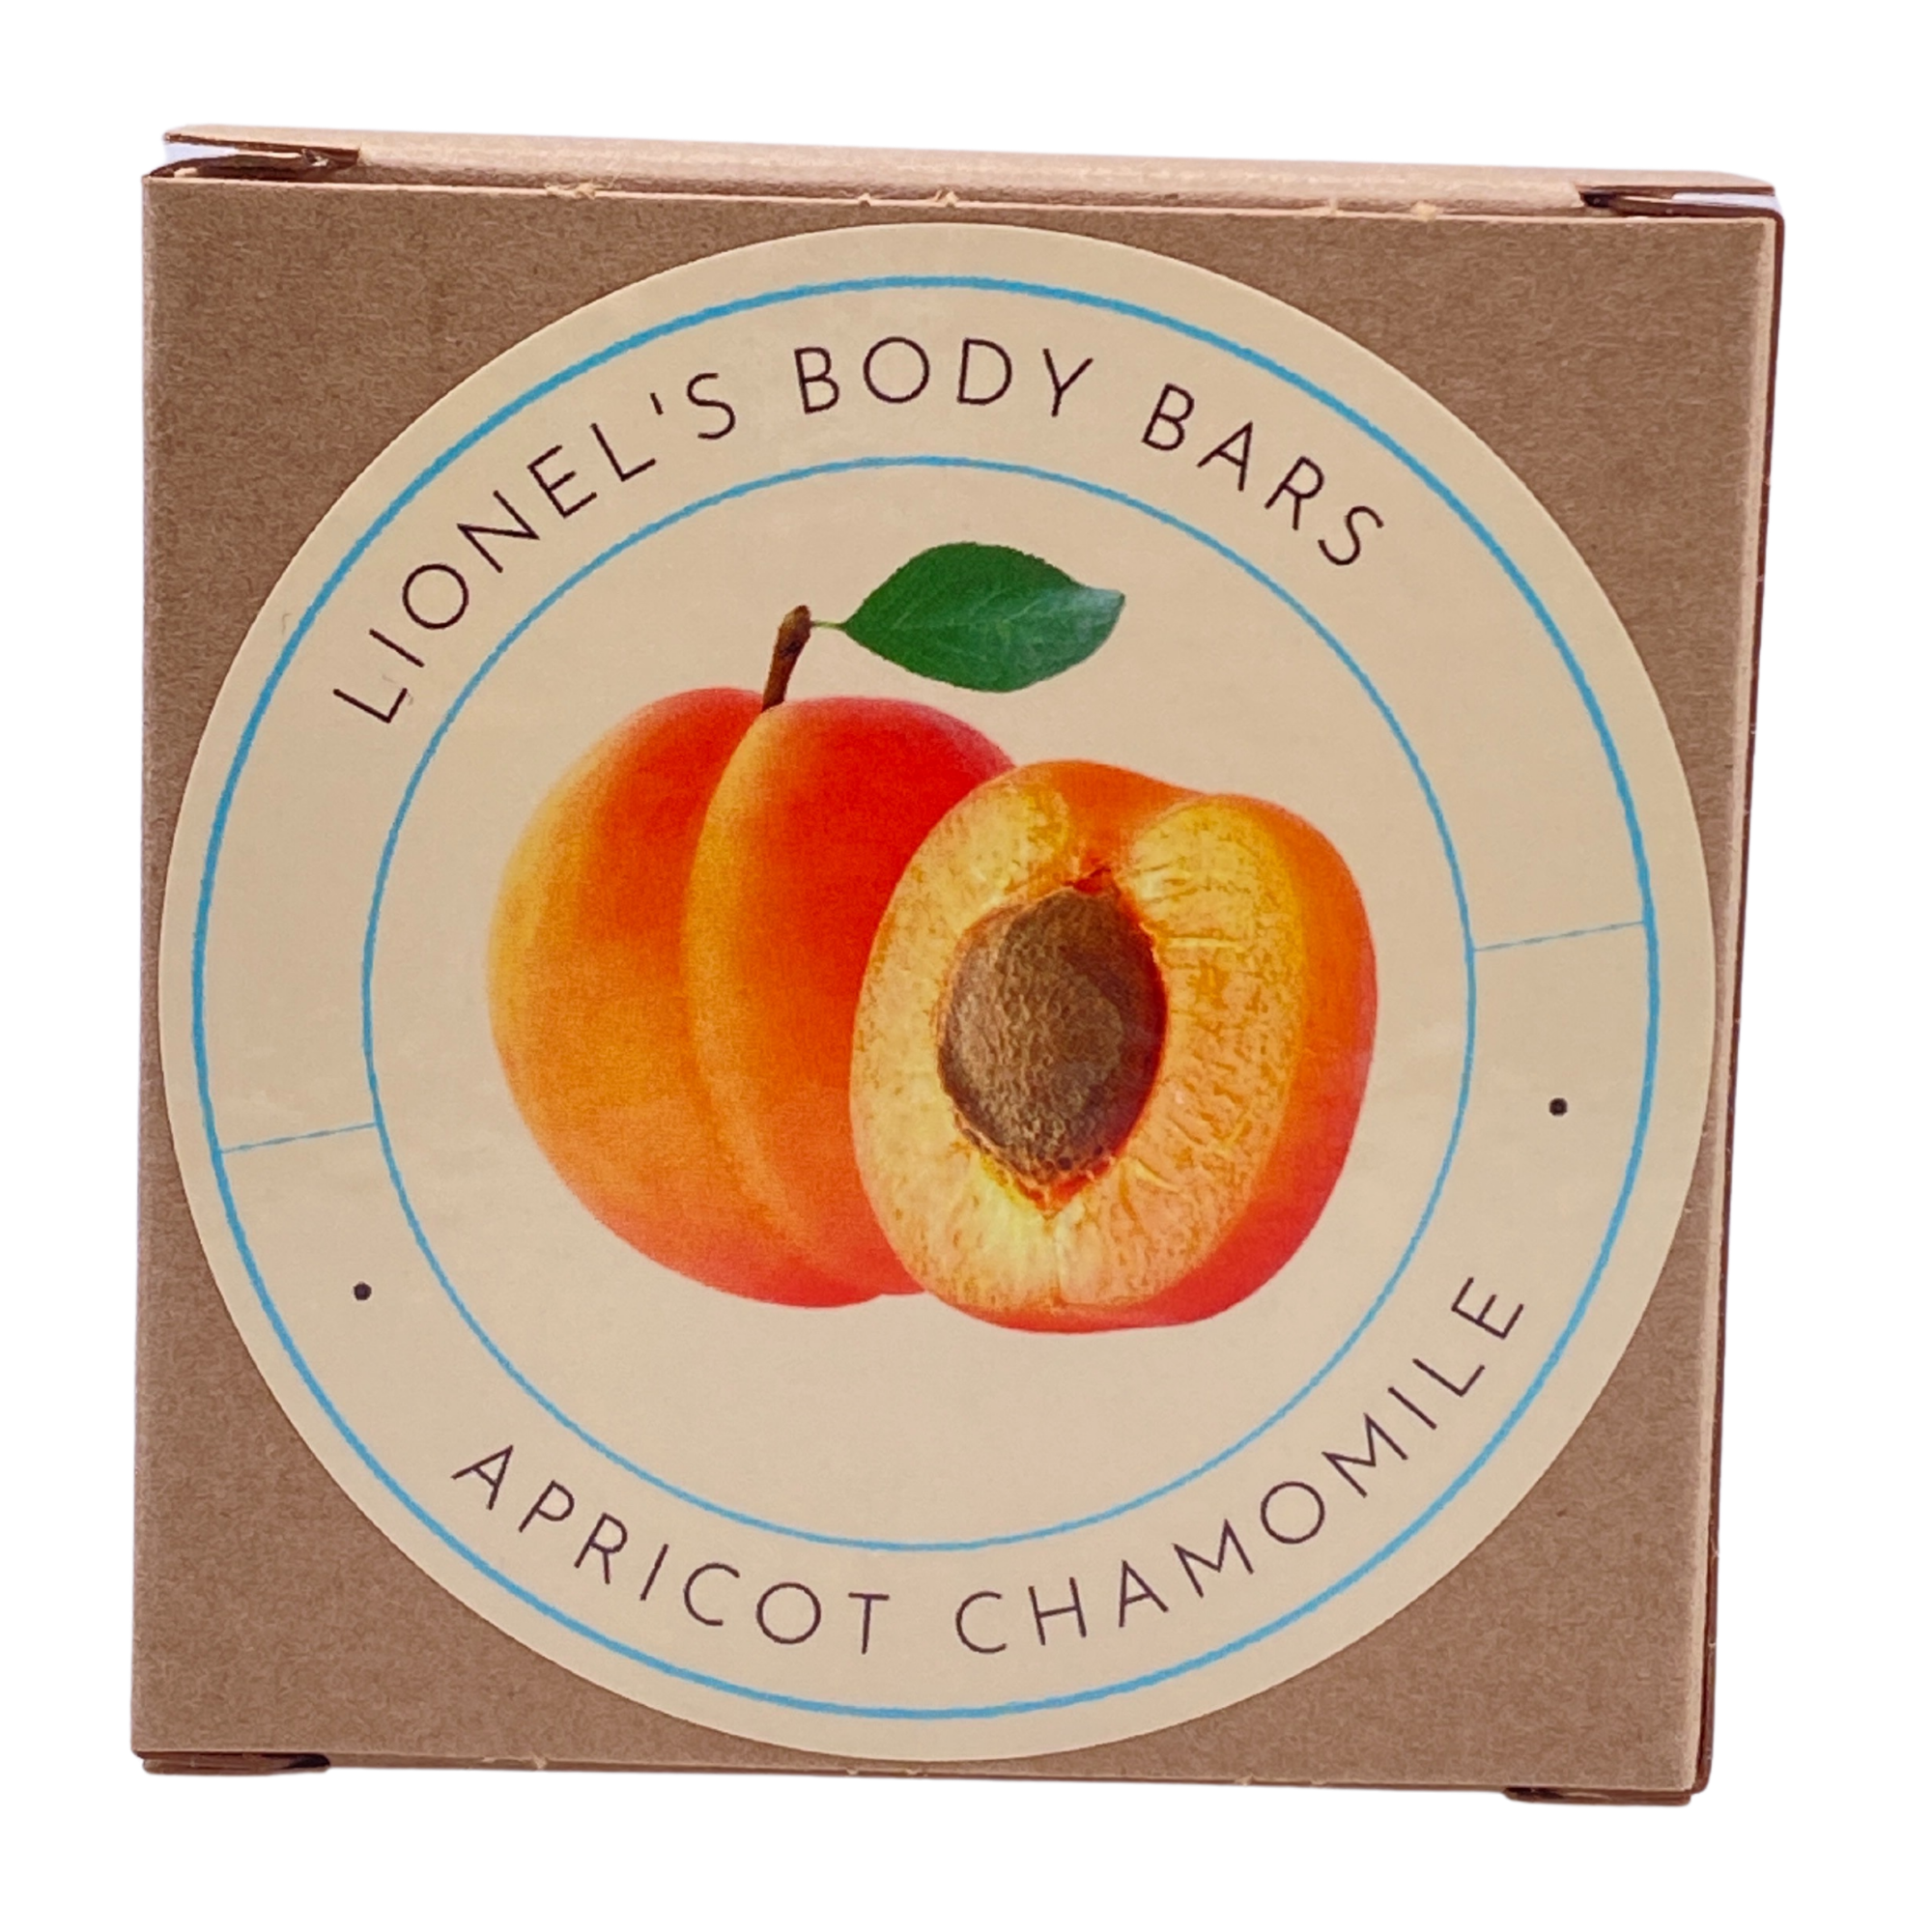 Apricot Chamomile Body Bar